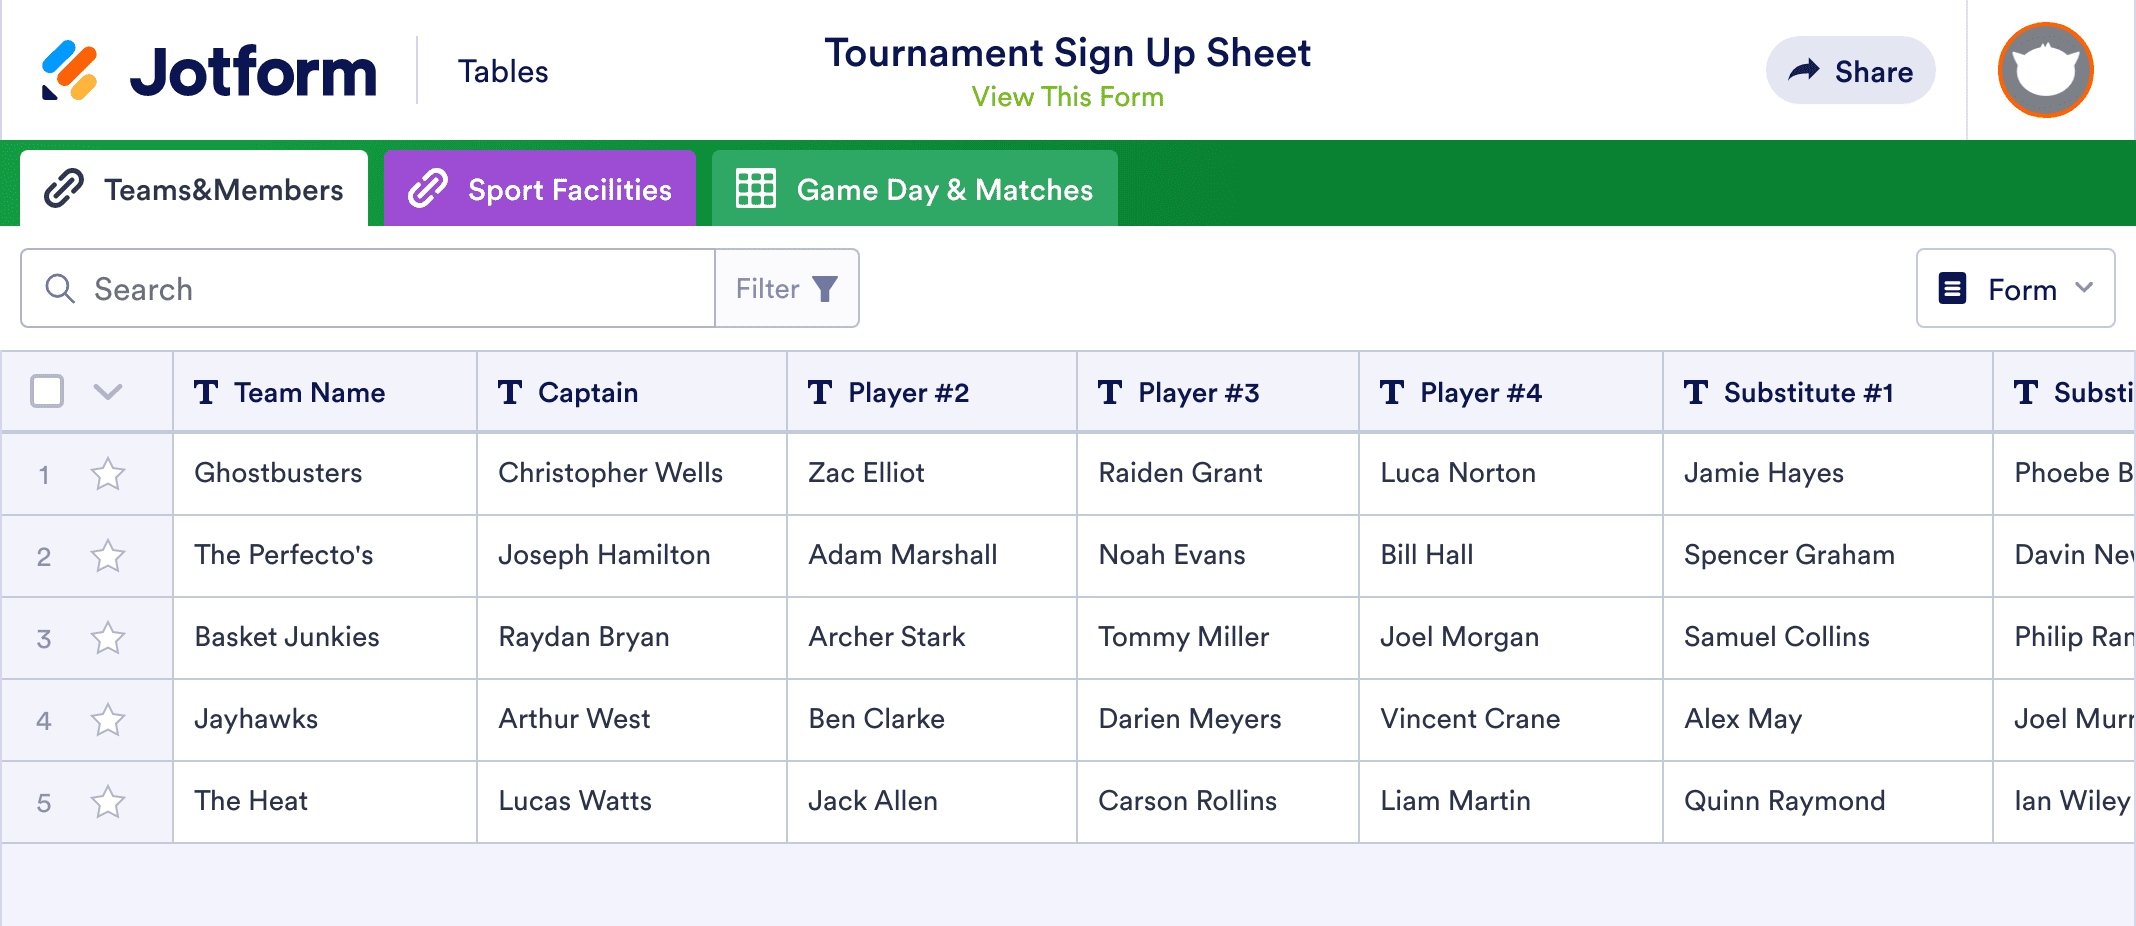 Tournament Sign Up Sheet